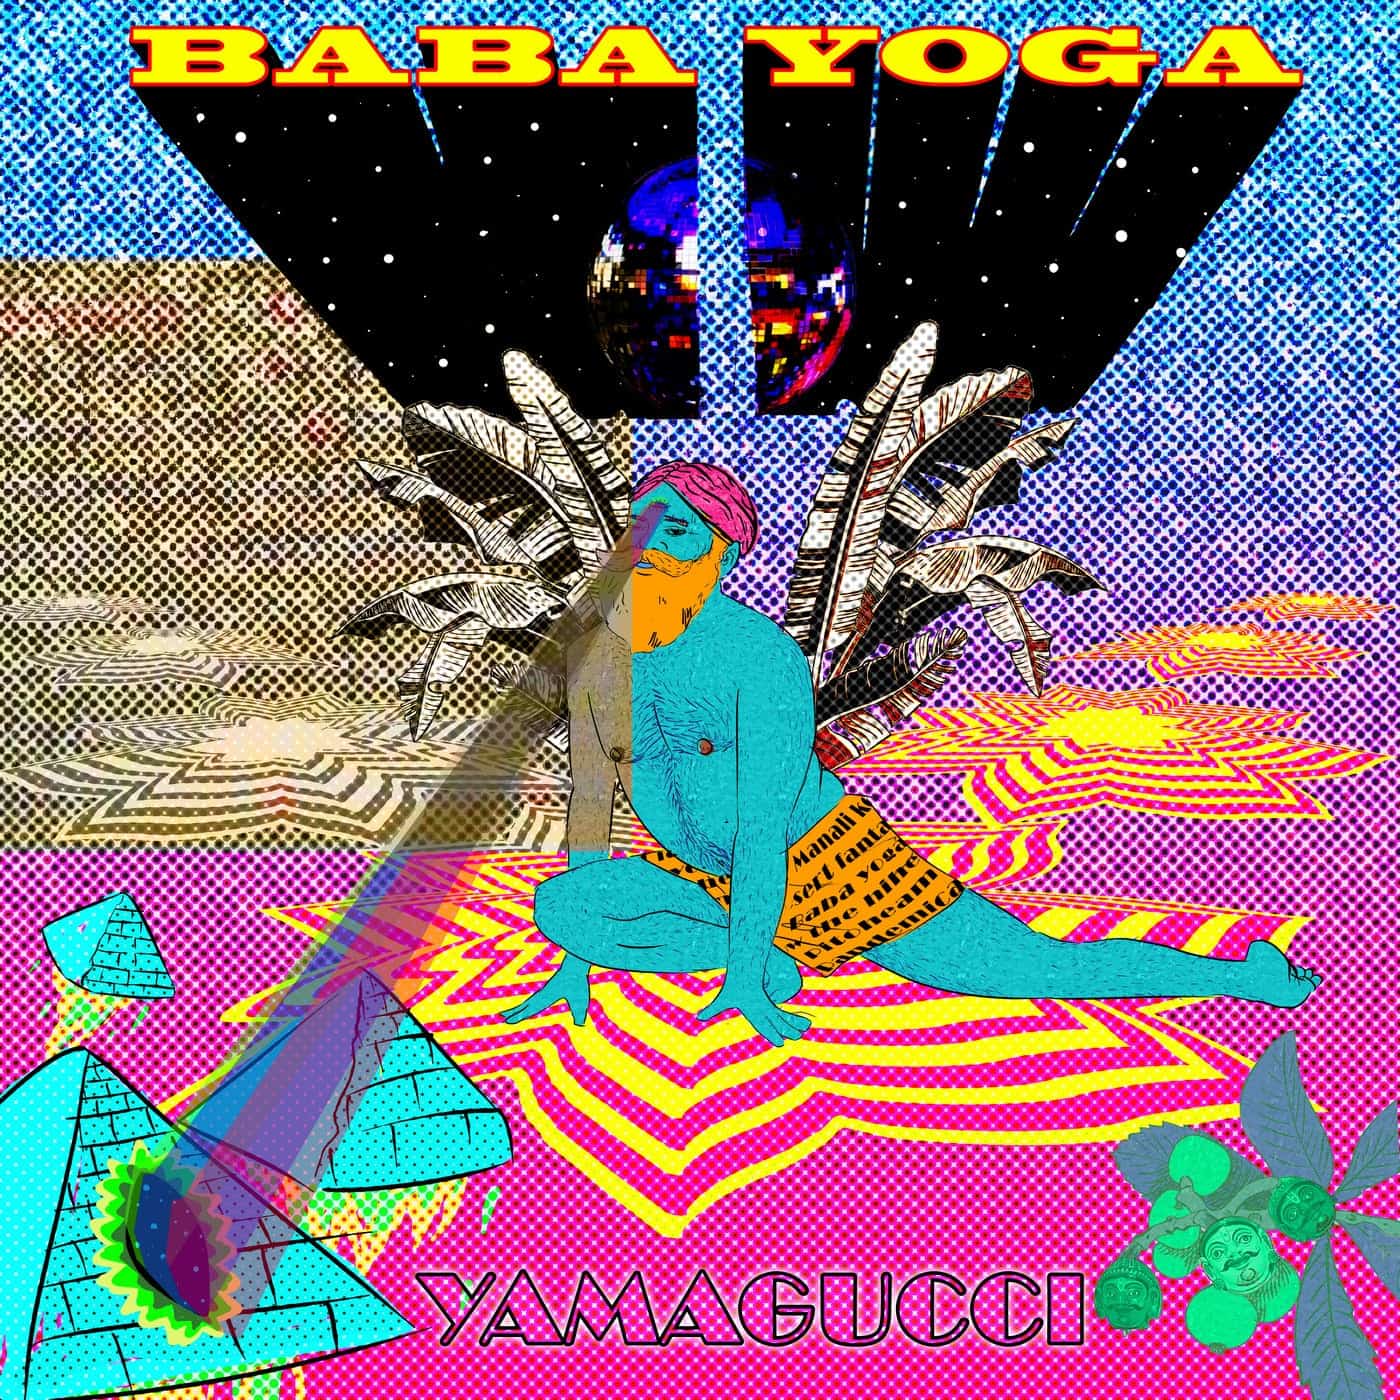 image cover: Yamagucci - Baba Yoga / MCH011